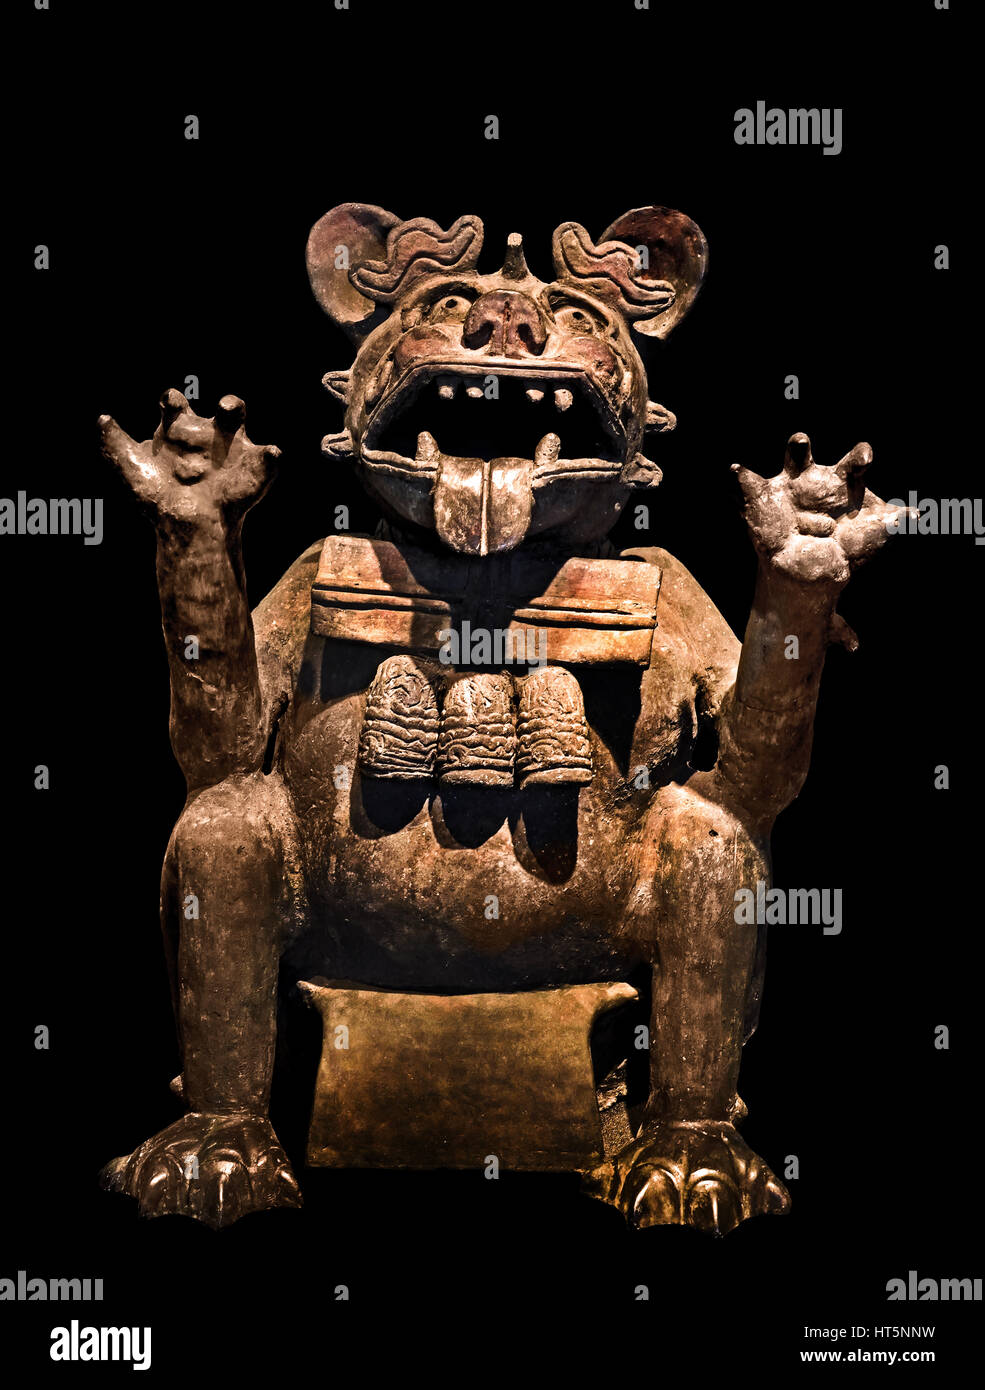 Bat Gott Tontopf 418-735 Mexiko Oaxaca zapotekischen (Kultur) 64,5 x 53 x 46,8 cm Zapoteken Zapotec Zivilisation Pre Columbian Mesoamerican Mittelamerika 500 v. Chr. - 900 n. Chr. American. Stockfoto